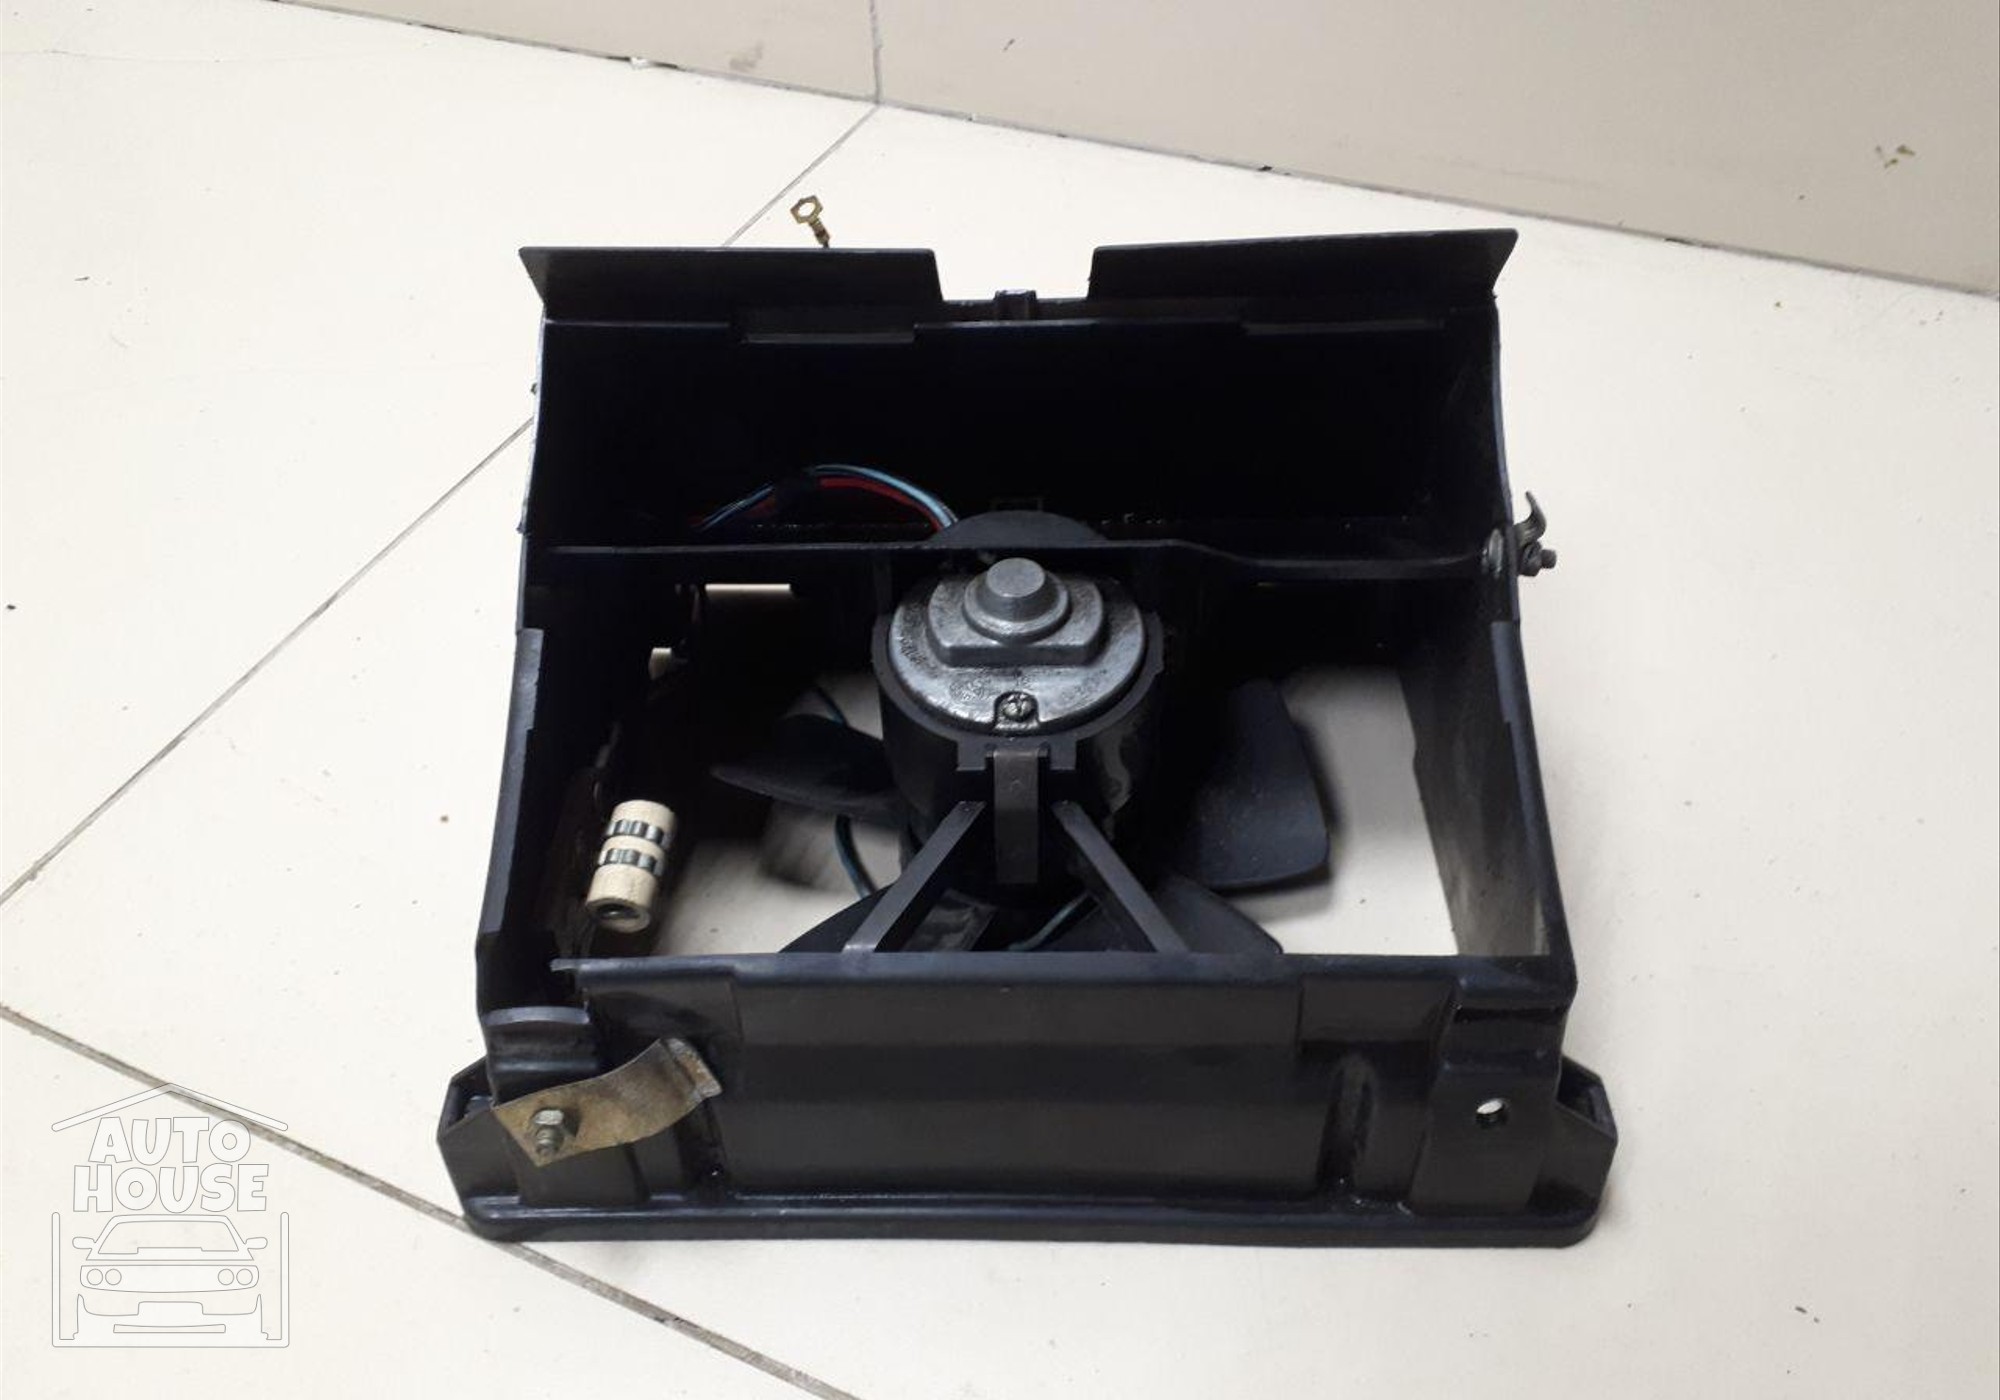 Вентилятор отопителя для Lada 2101